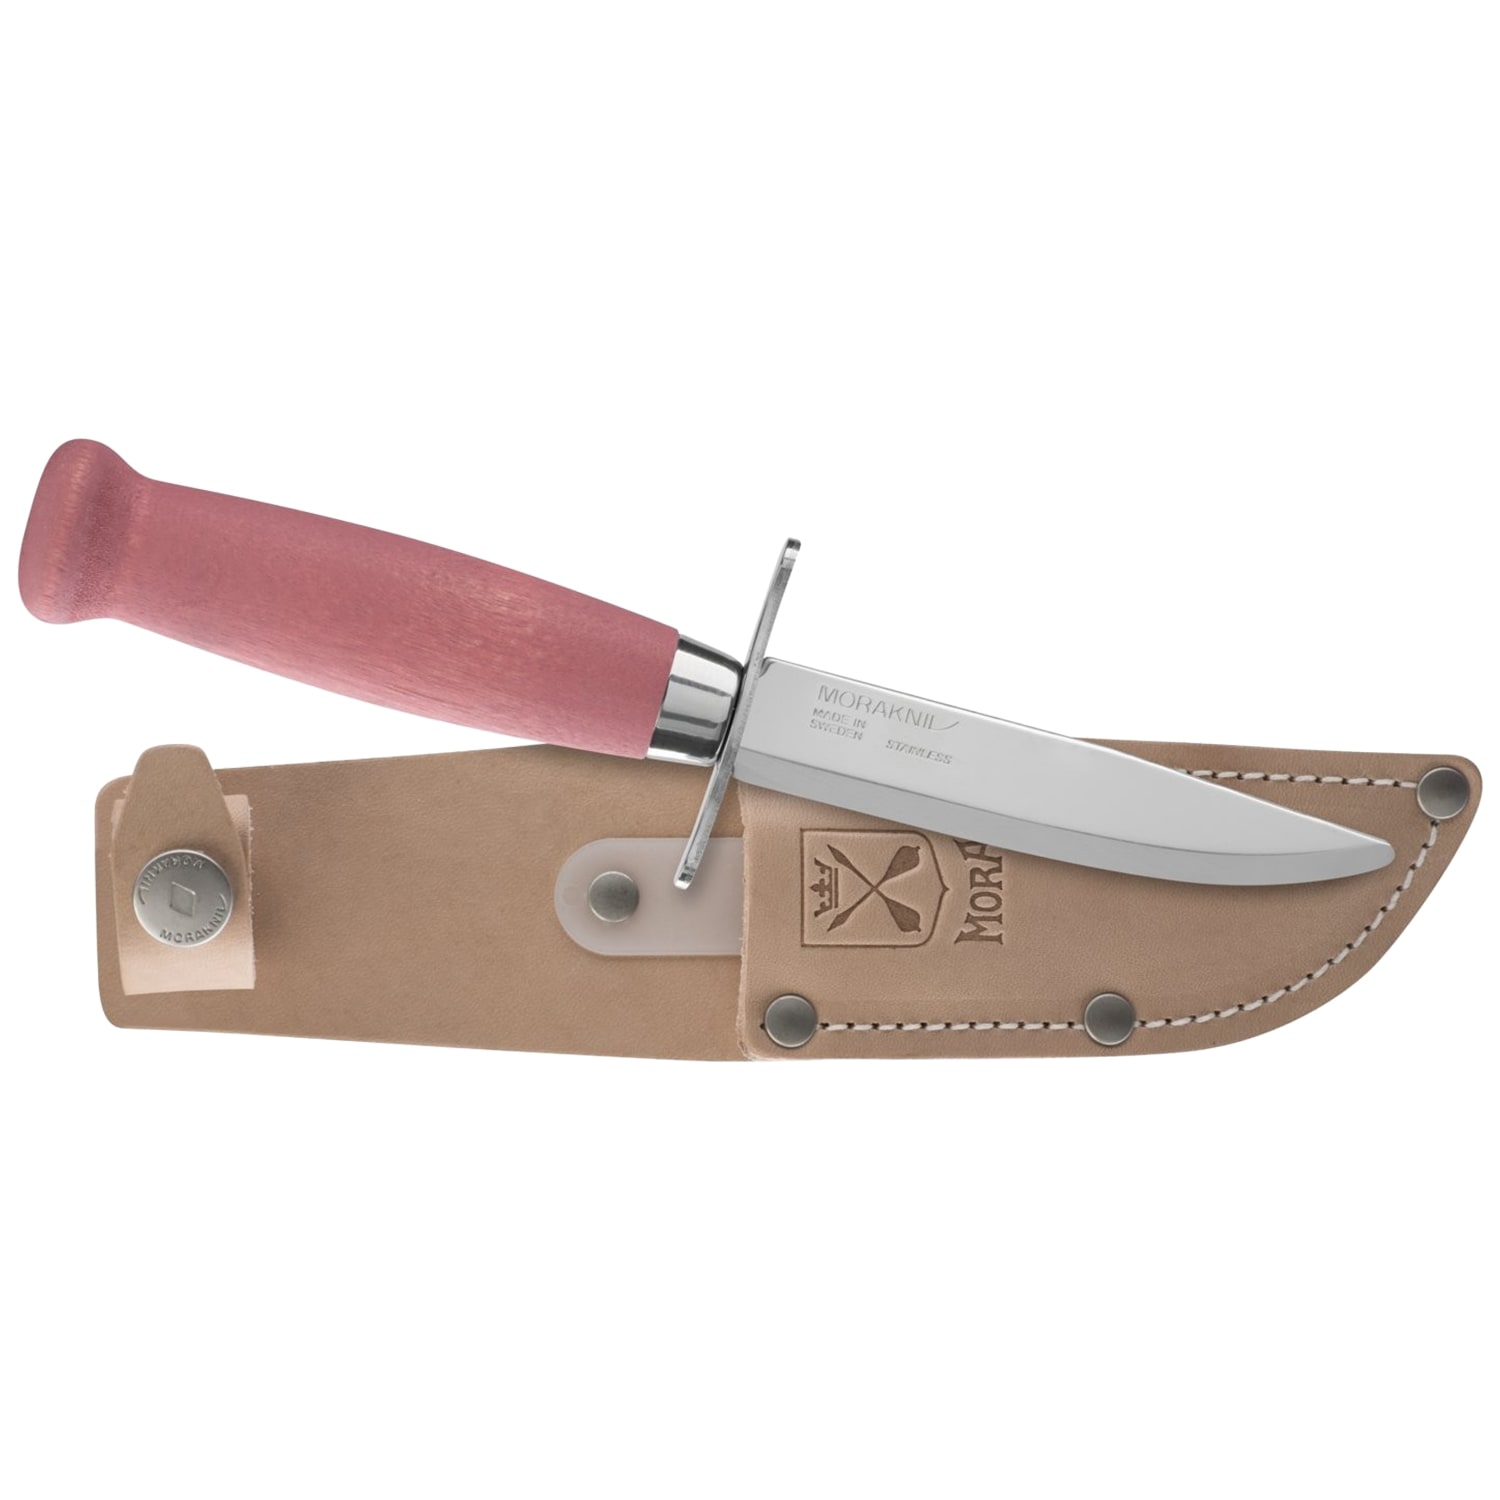 Nóż Mora Scout 39 Safe - Lingonberry